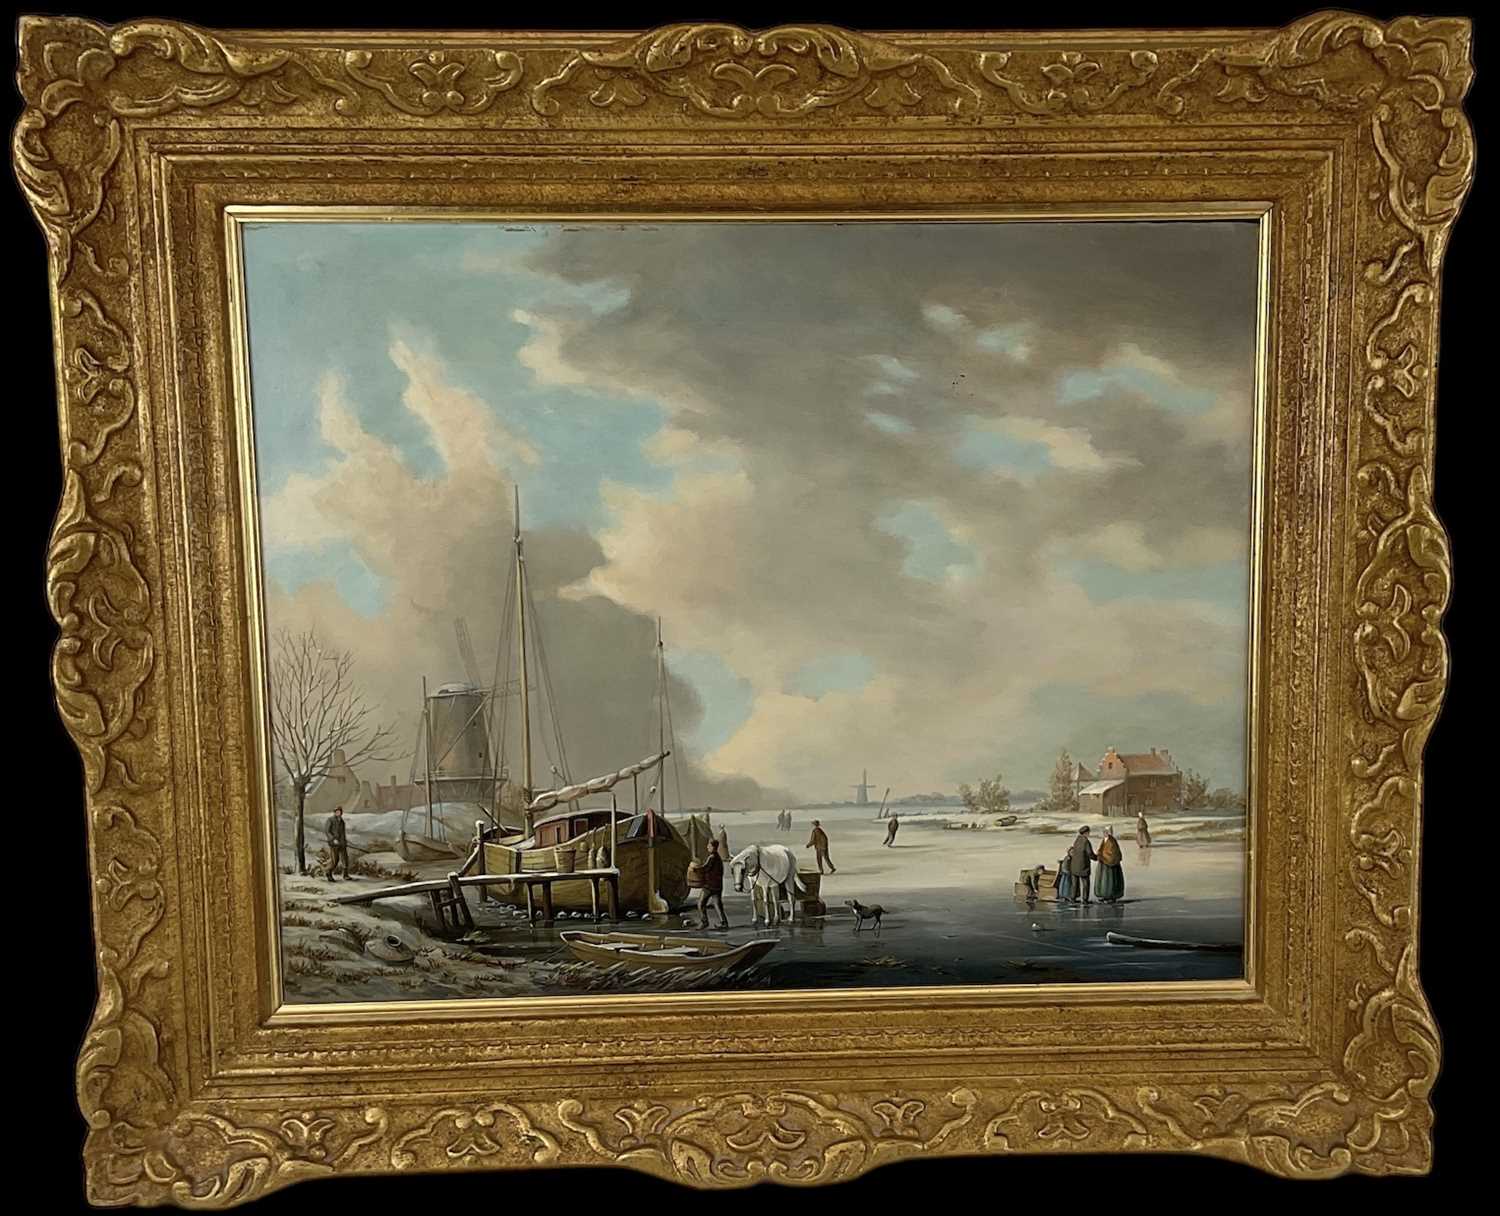 VAN DER MEULEN; oil on board, frozen winter landscape, signed lower left, 39 x 49cm, gilt framed.